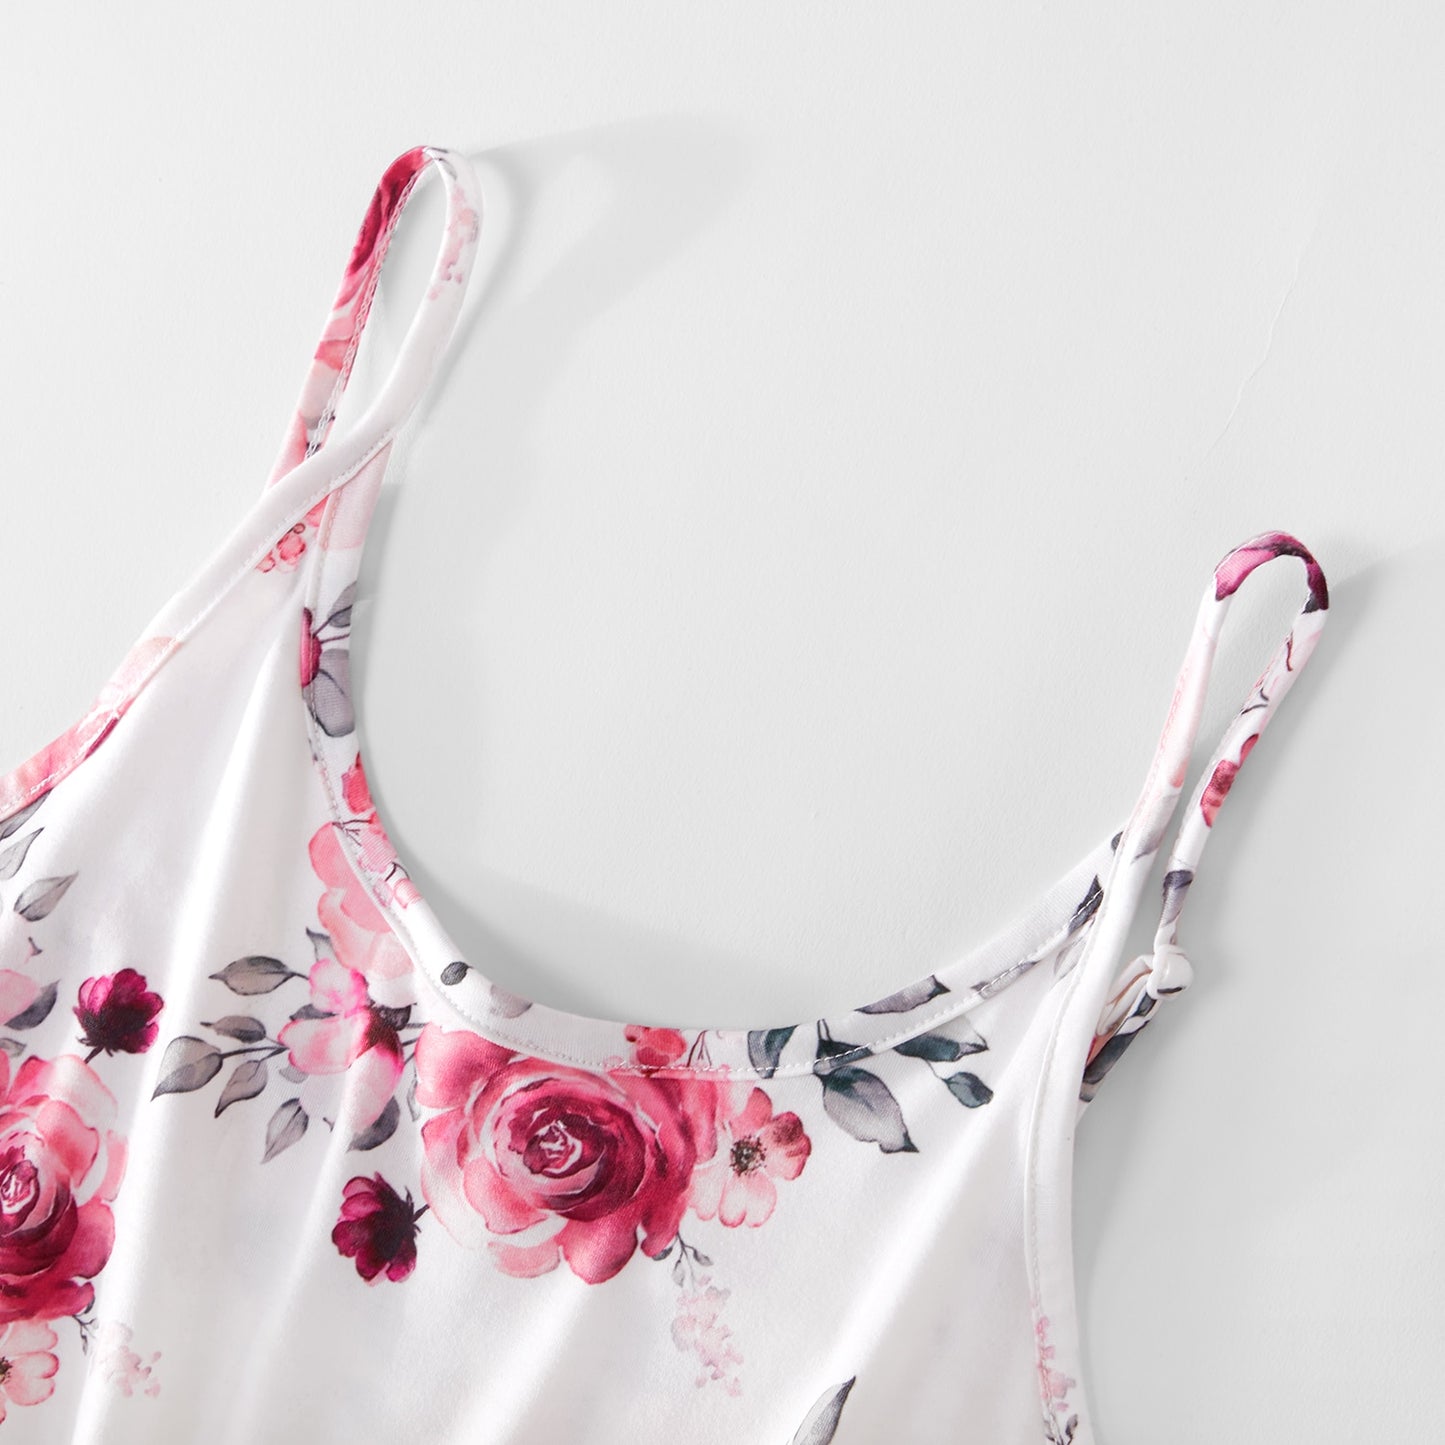 PatPat Floral Print Matching White Sling Maxi Dresses